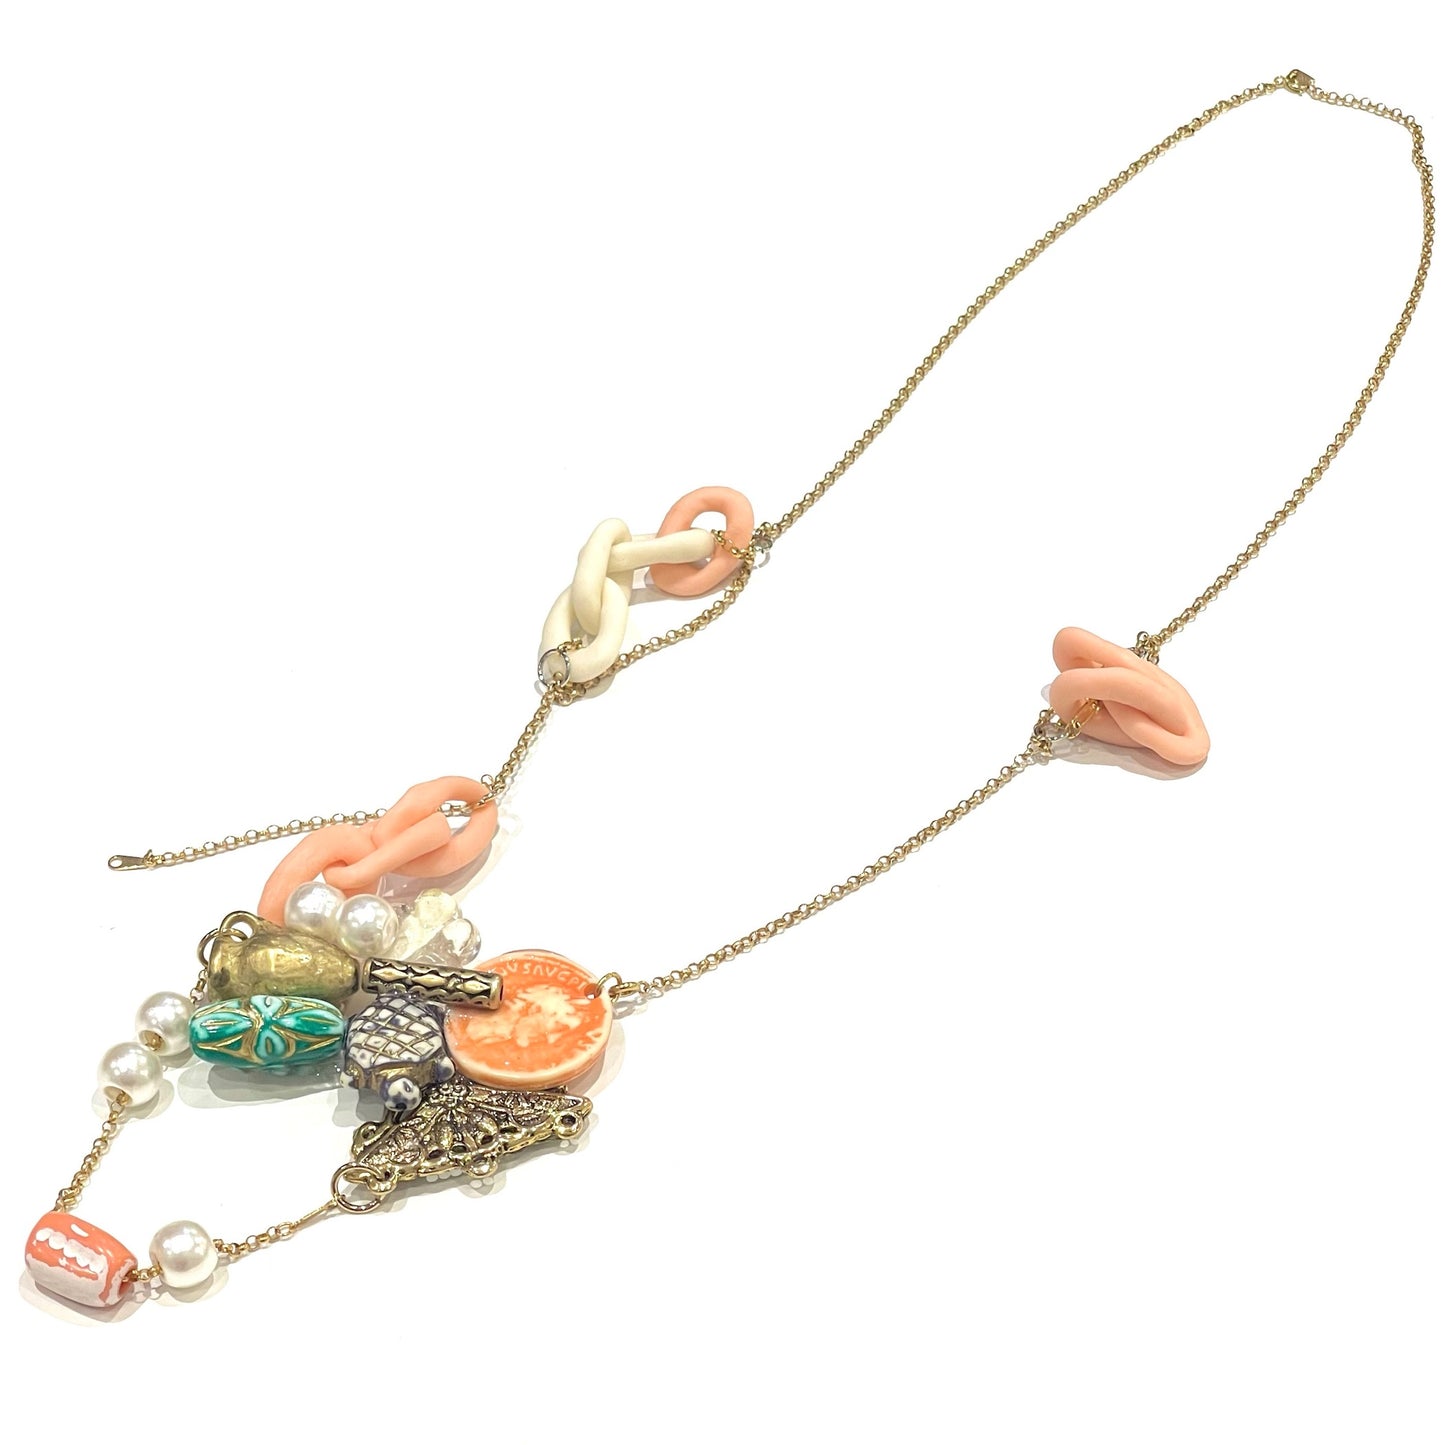 yushokobayashi / Mix Jewelry Necklace / Mix